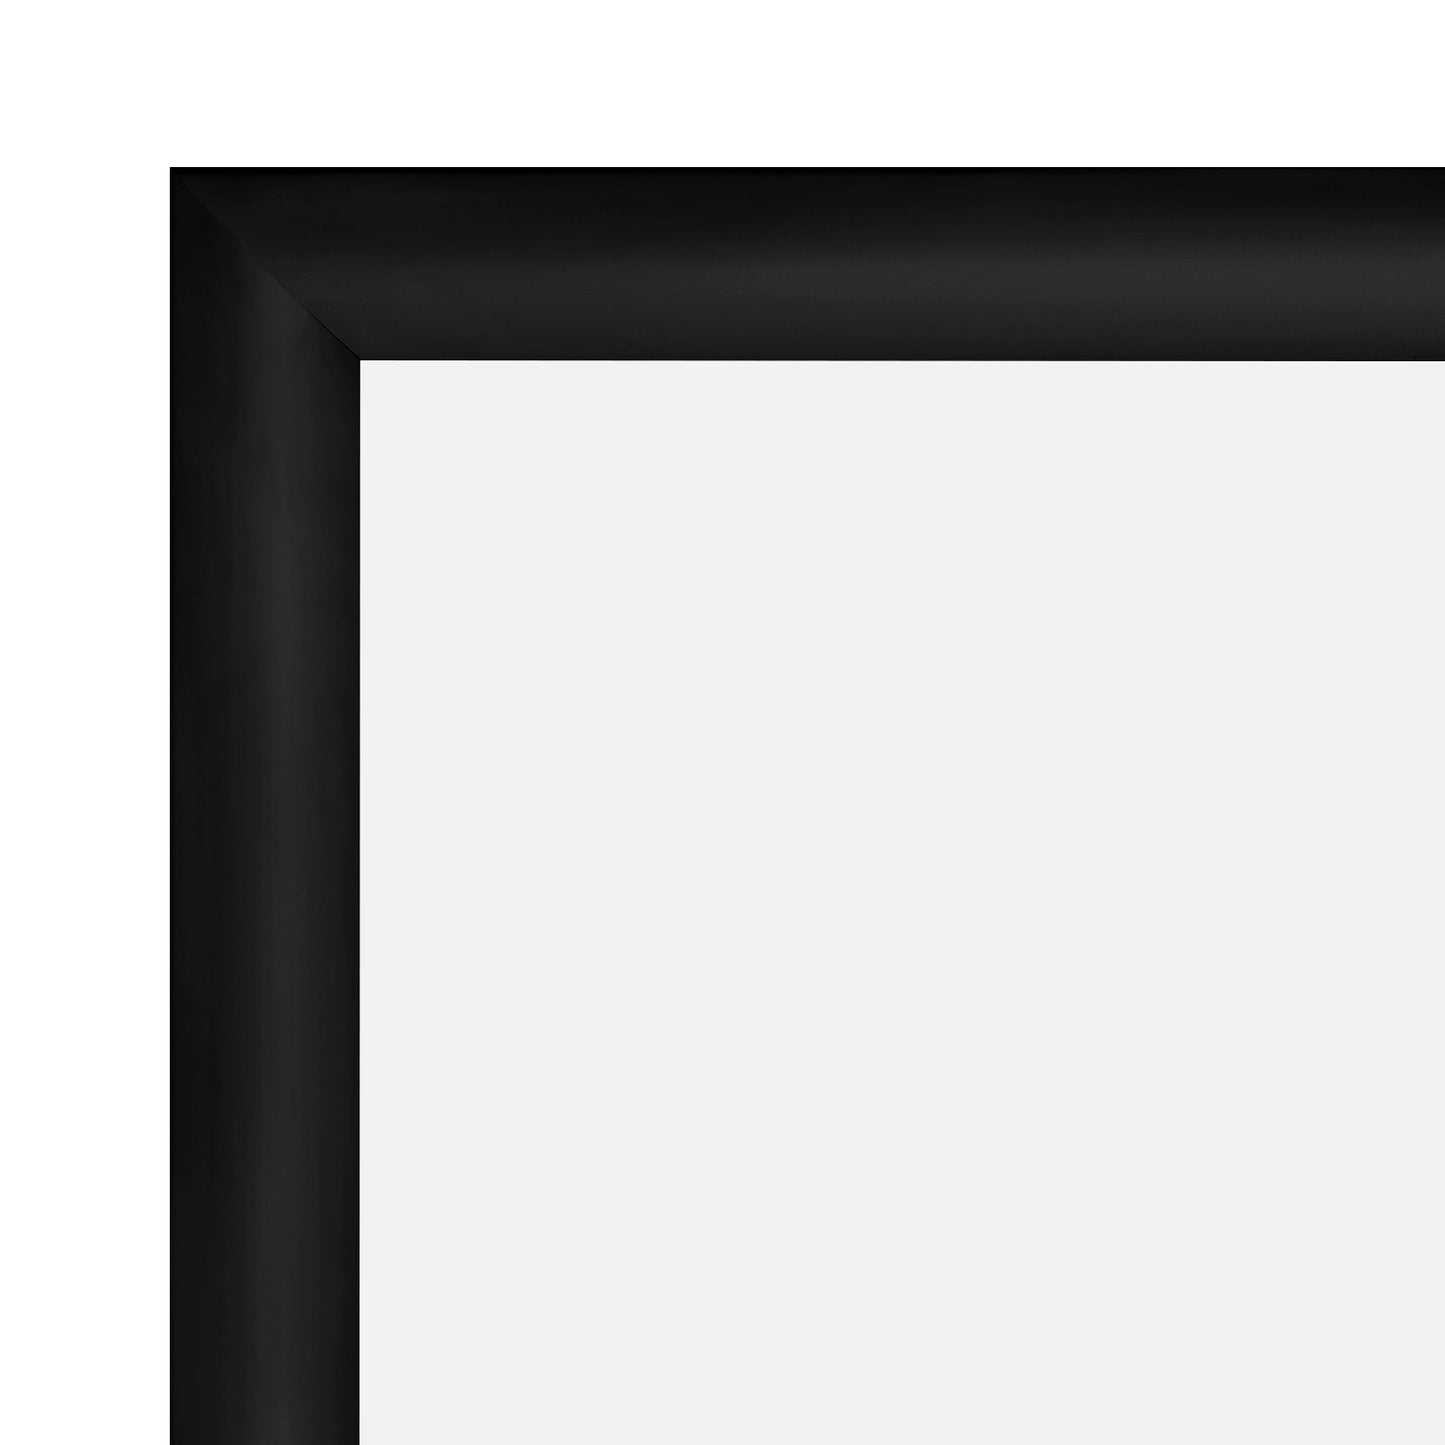 36x48 Black SnapeZo® Snap Frame - 1.2" Profile - Snap Frames Direct